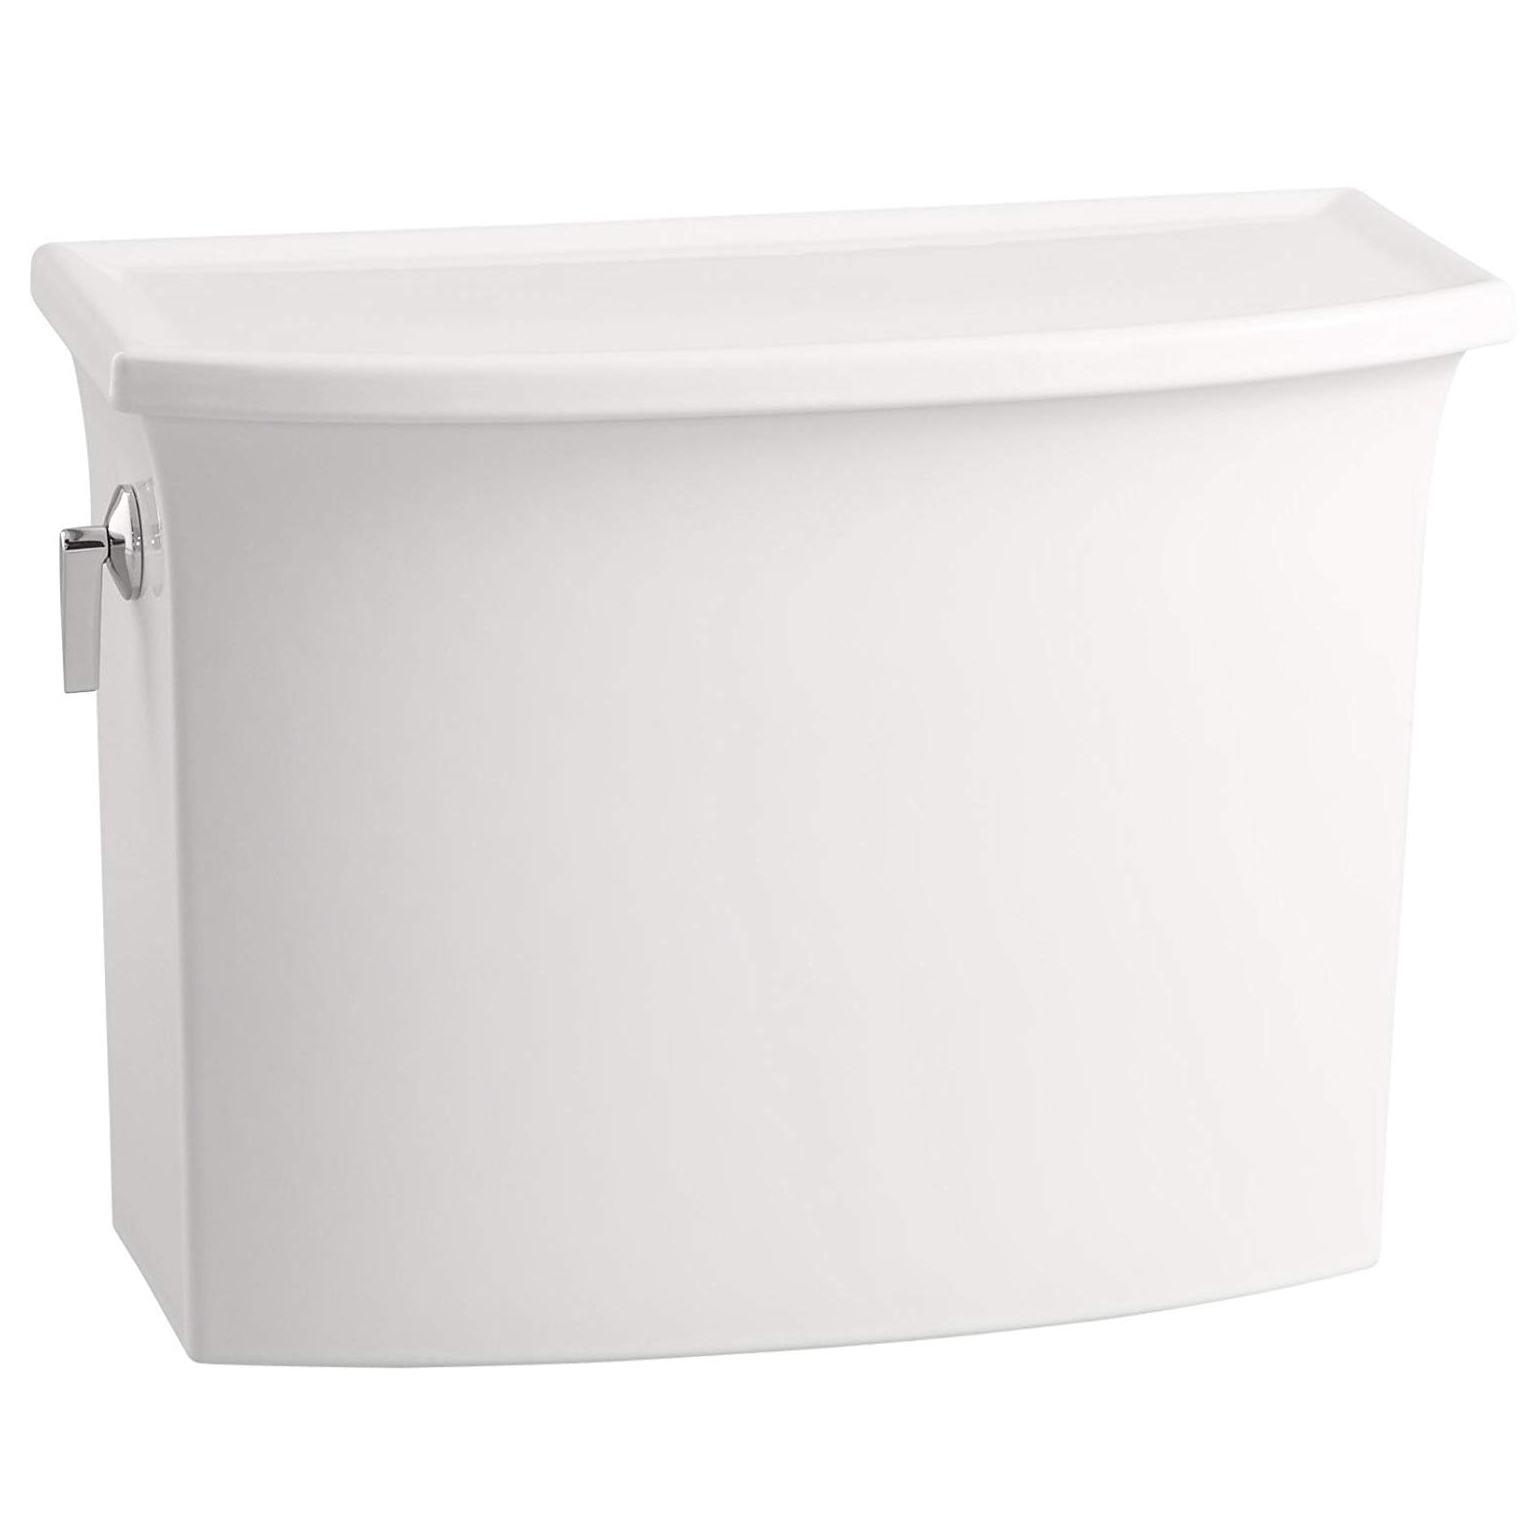 Archer 1.28 gpf Toilet Tank in White